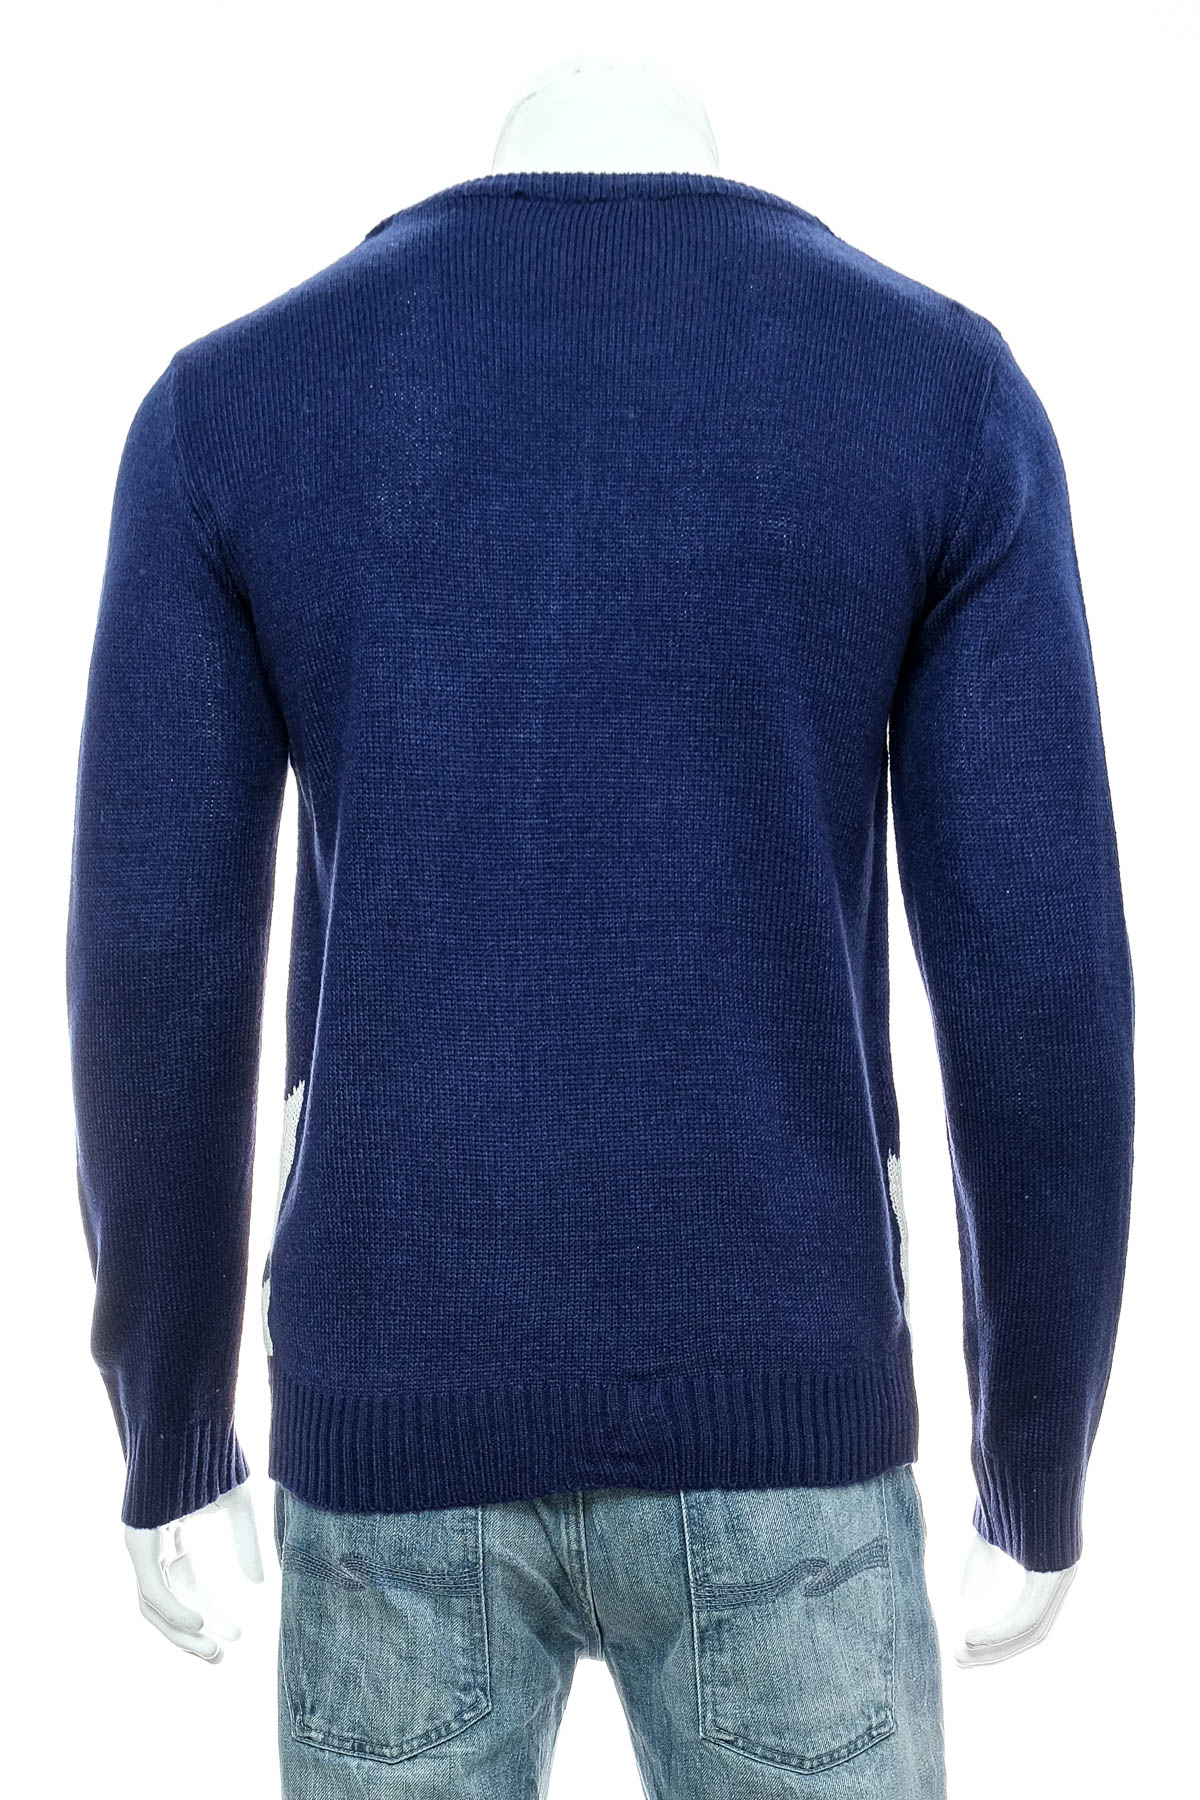 Men's sweater - United Labels - 1